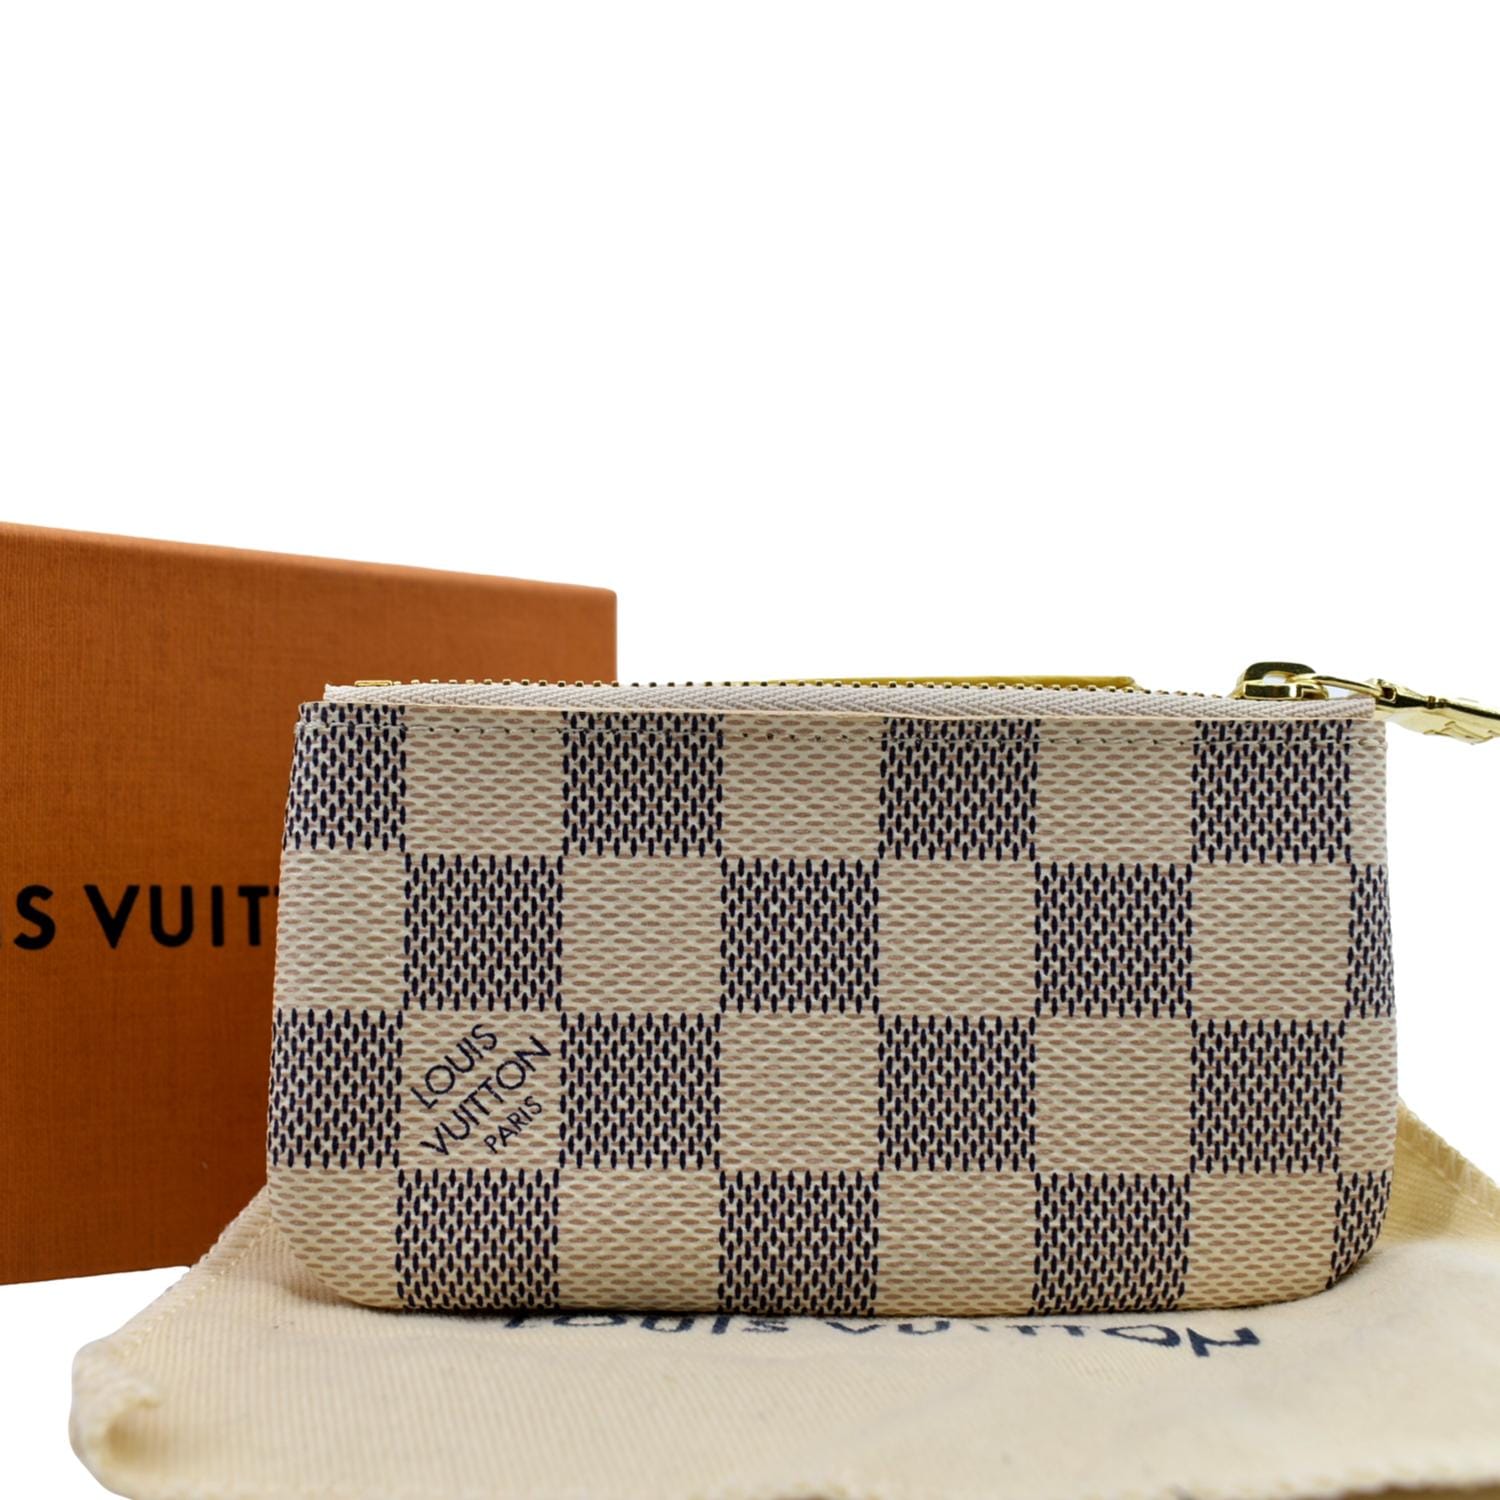 Louis Vuitton Damier Azur Key pouch